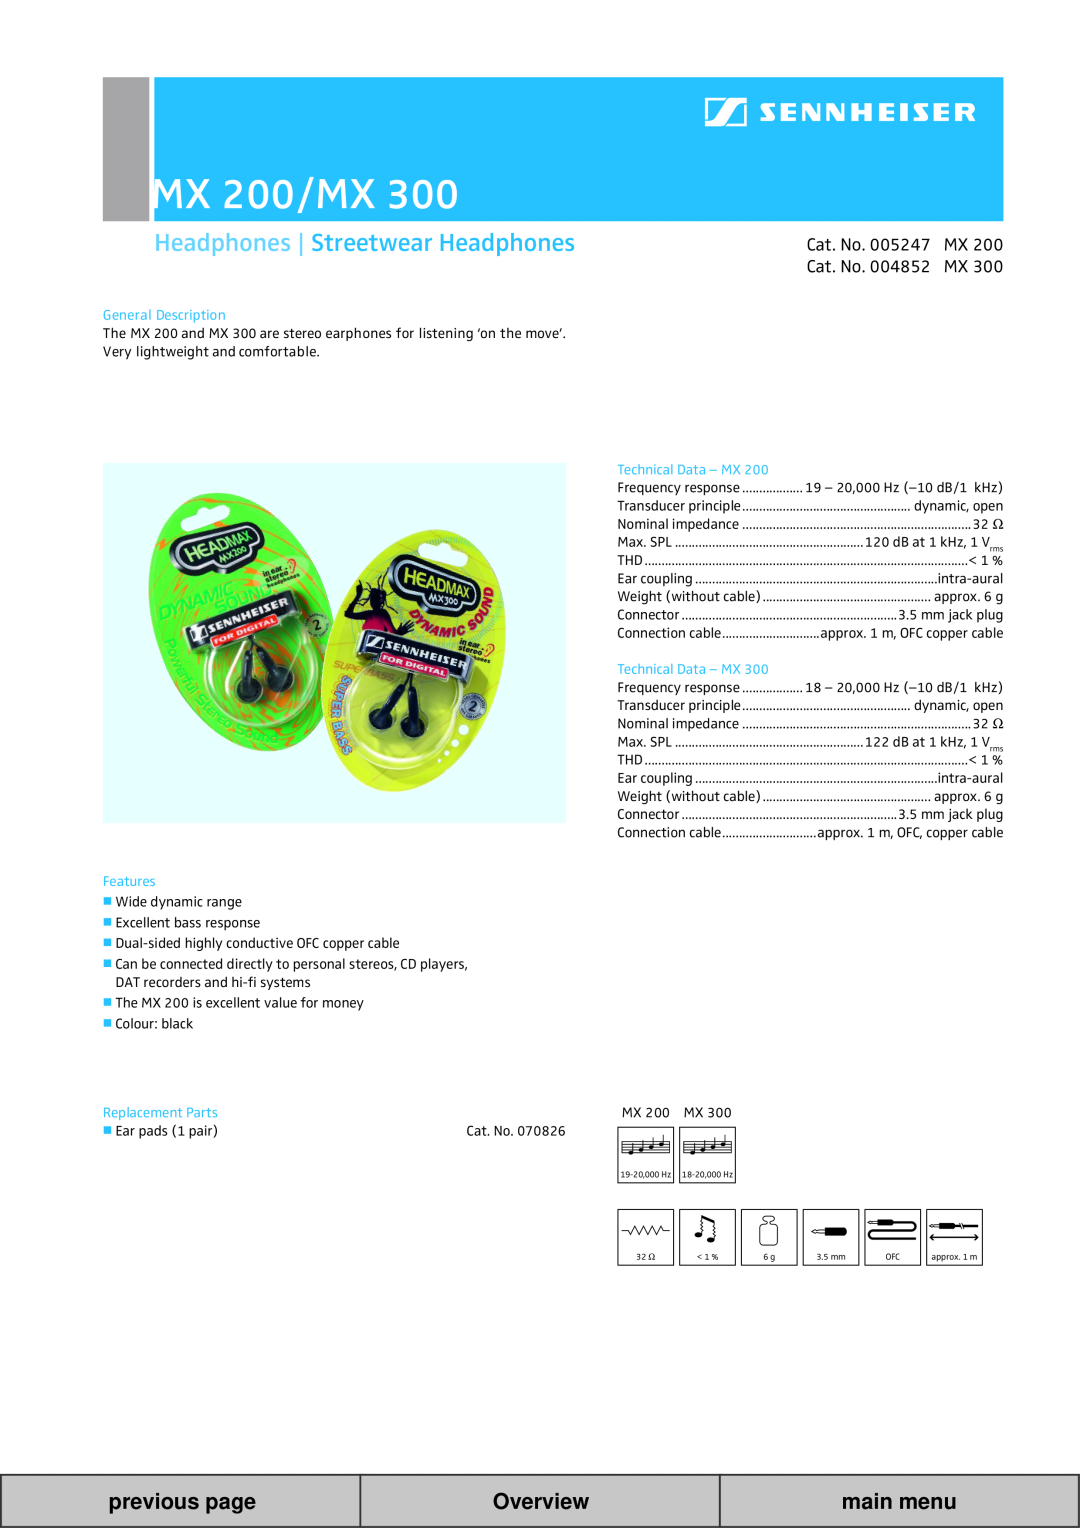 Sennheiser manual MX 200/MX, Headphones Streetwear Headphones, previous page, Overview, General Description, Features 